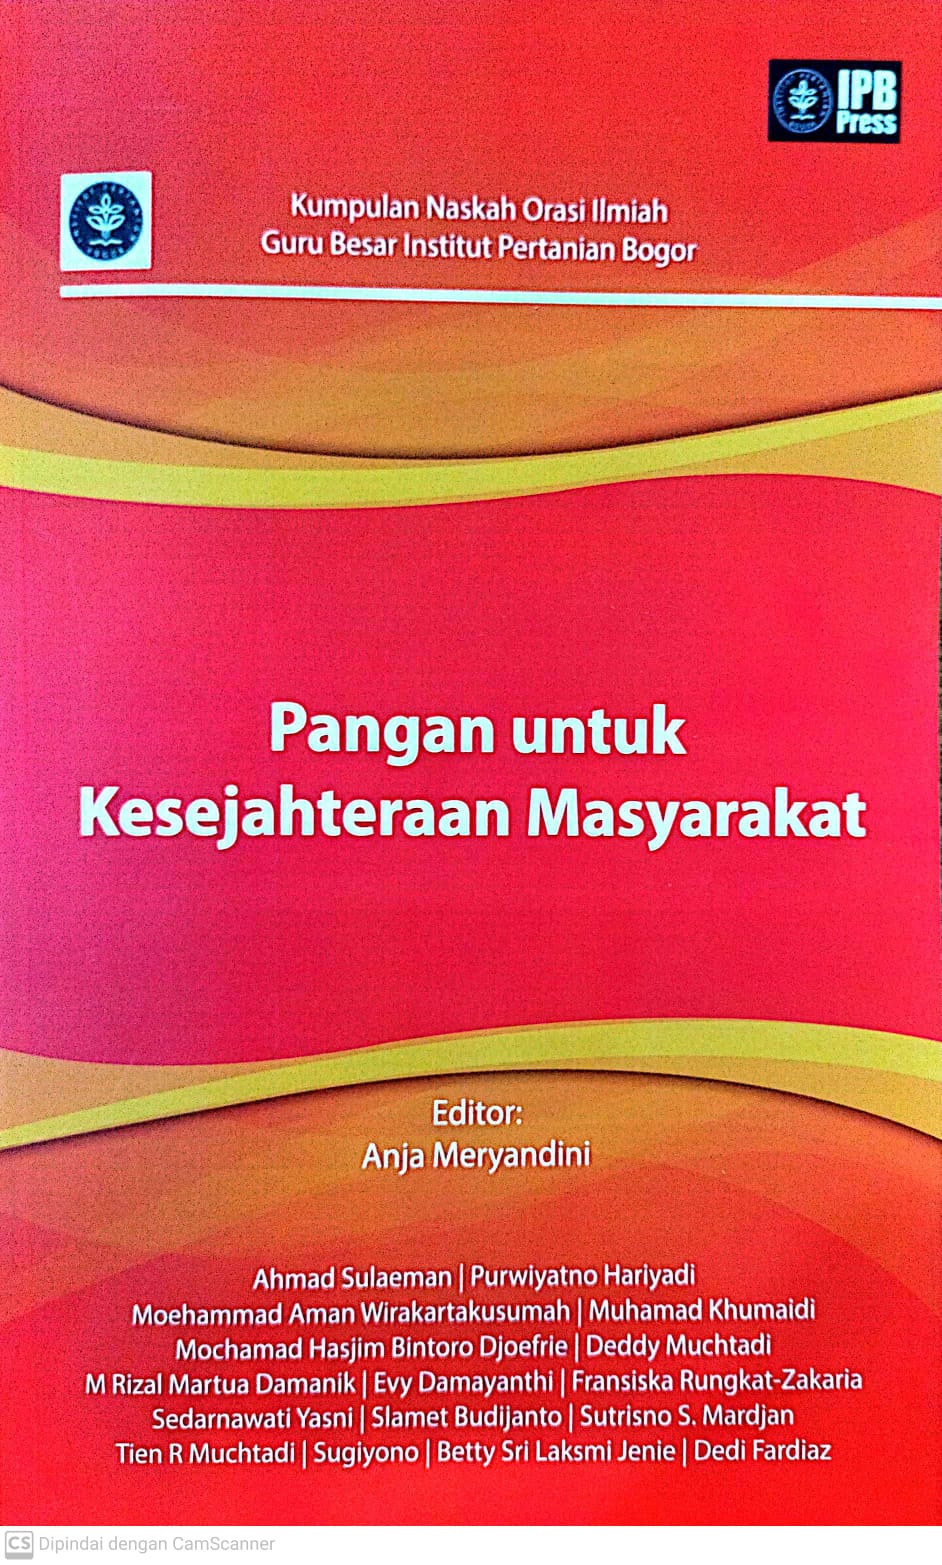 Pangan Untuk Kesejarteraan Masyarakat ; (Kumpulan naskah orasi ilmiah Guru Besar Institut Pertanian Bogor)